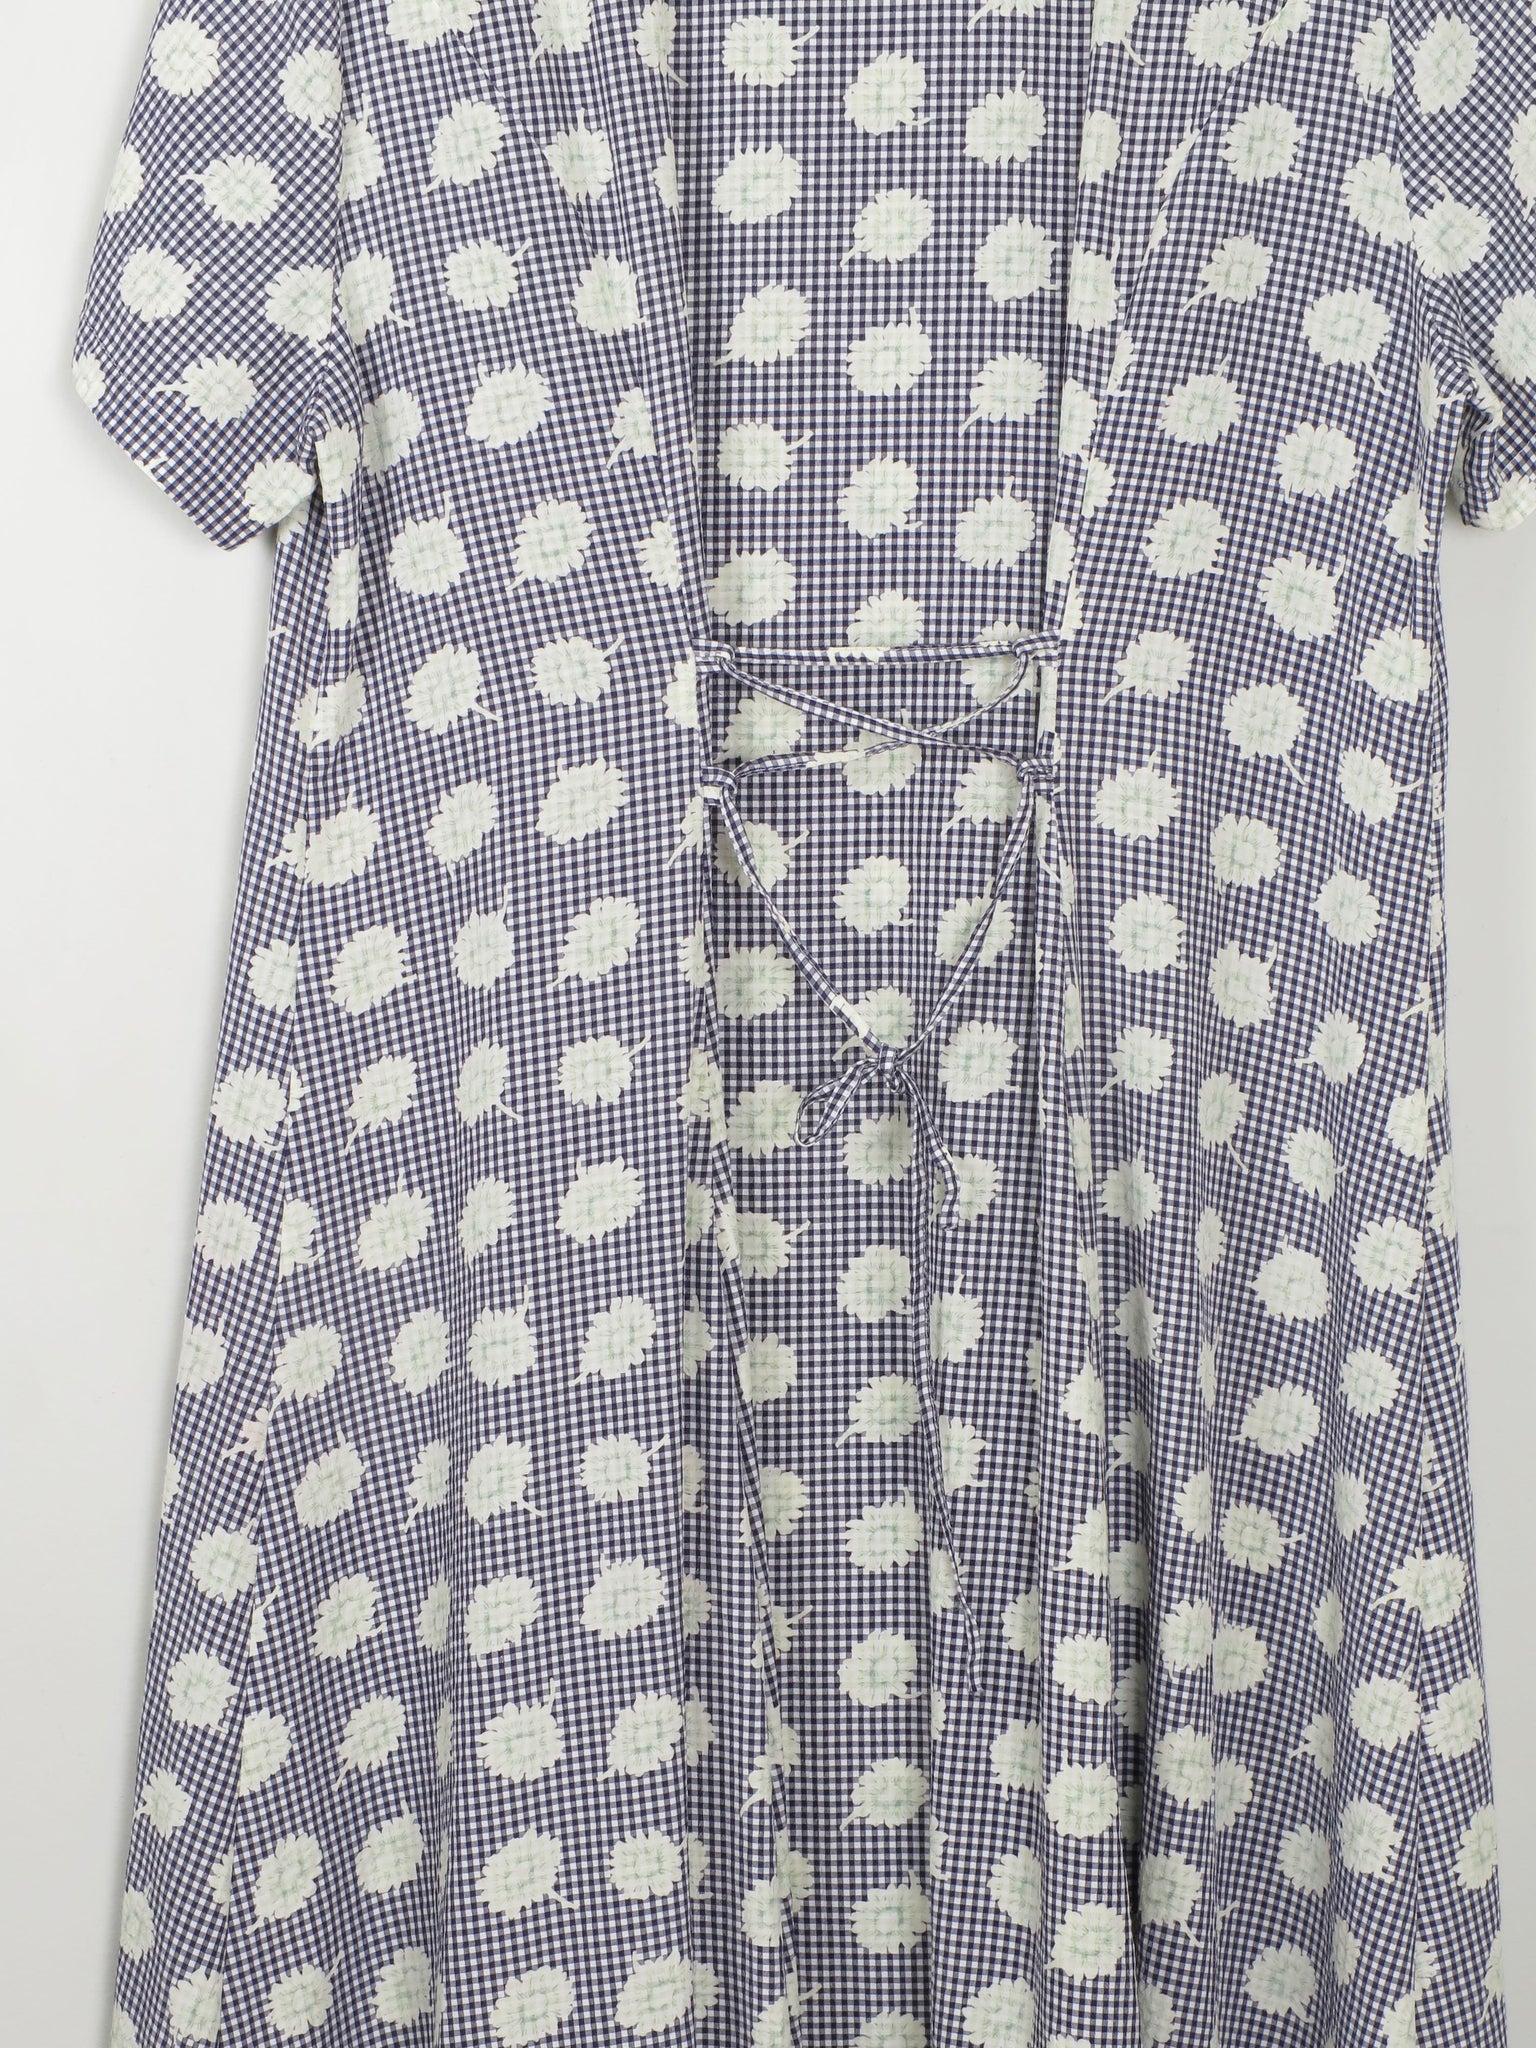 Vintage Check & Floral Dress Button Down Dress XL/XXL - The Harlequin